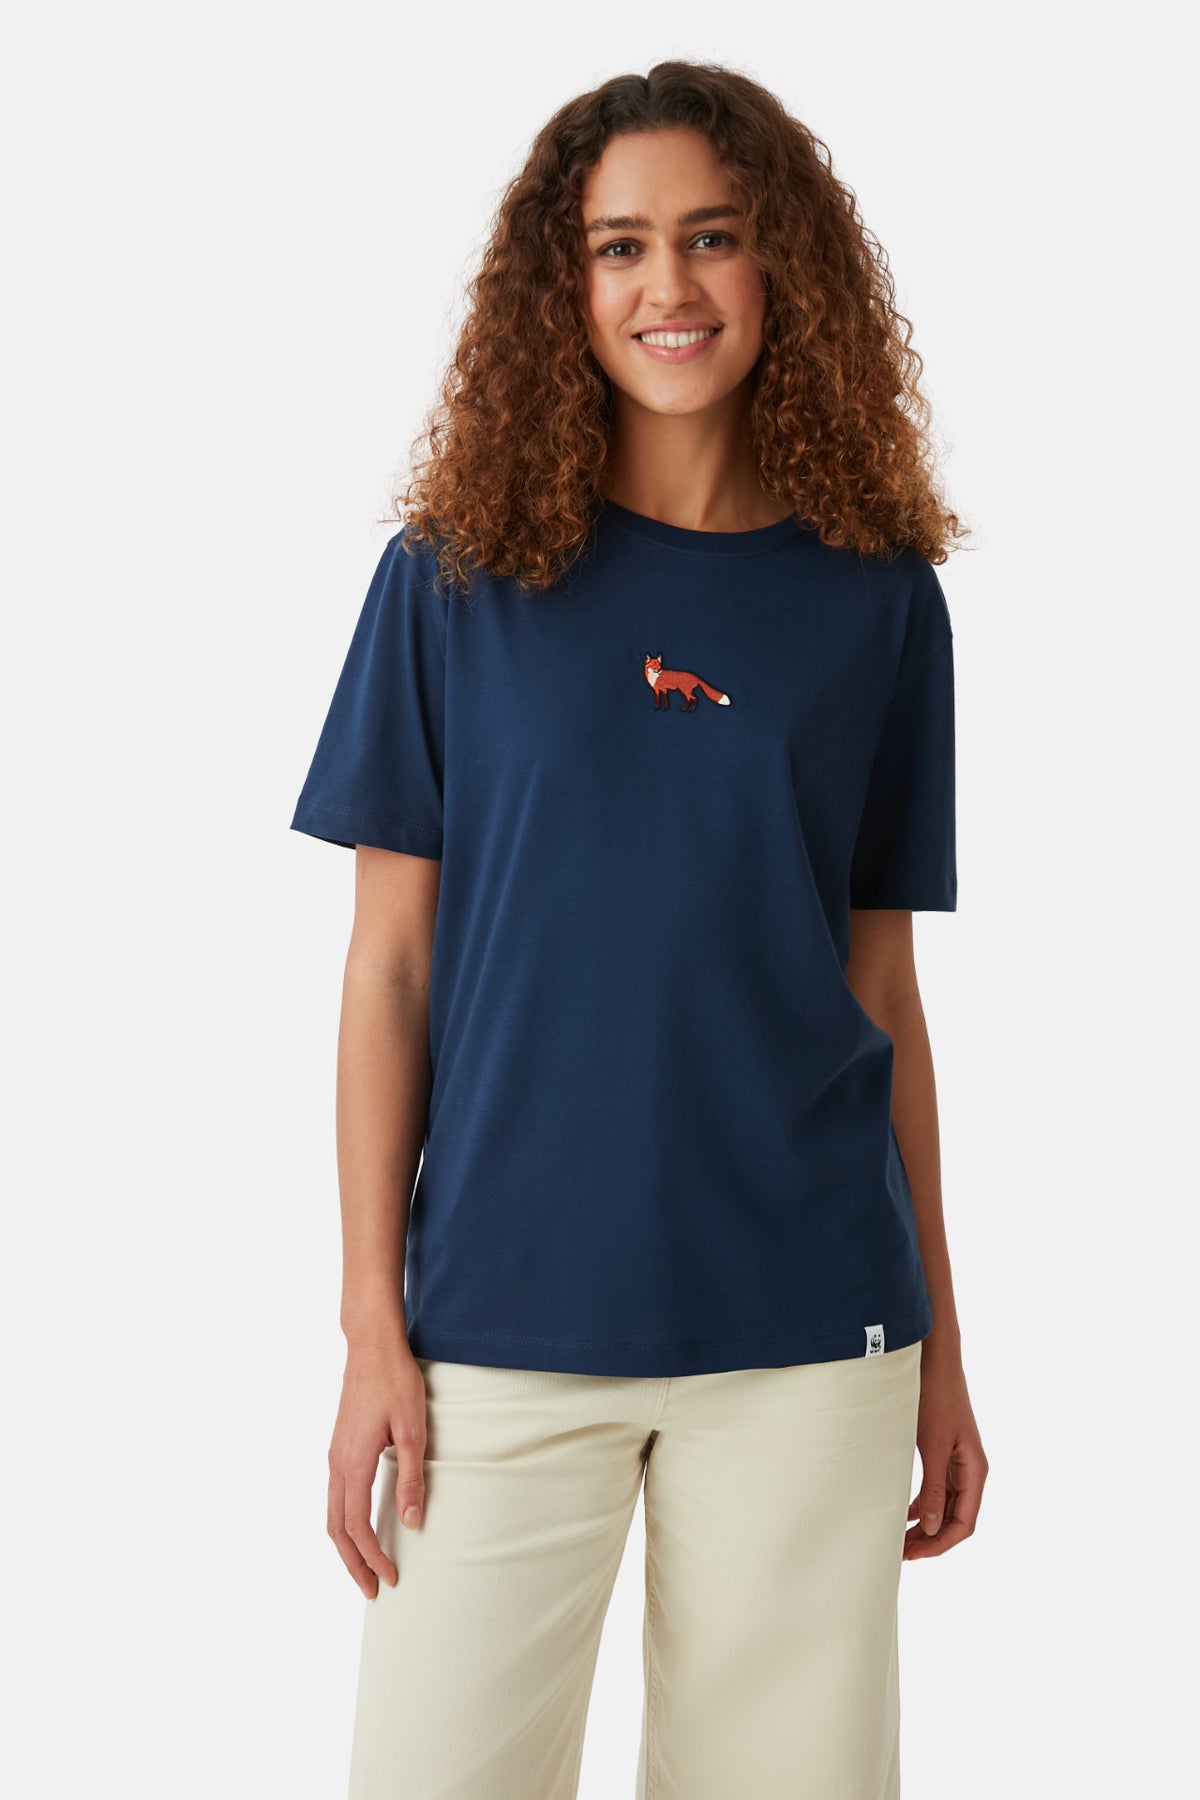 Kızıl Tilki Supreme T-shirt - Lacivert